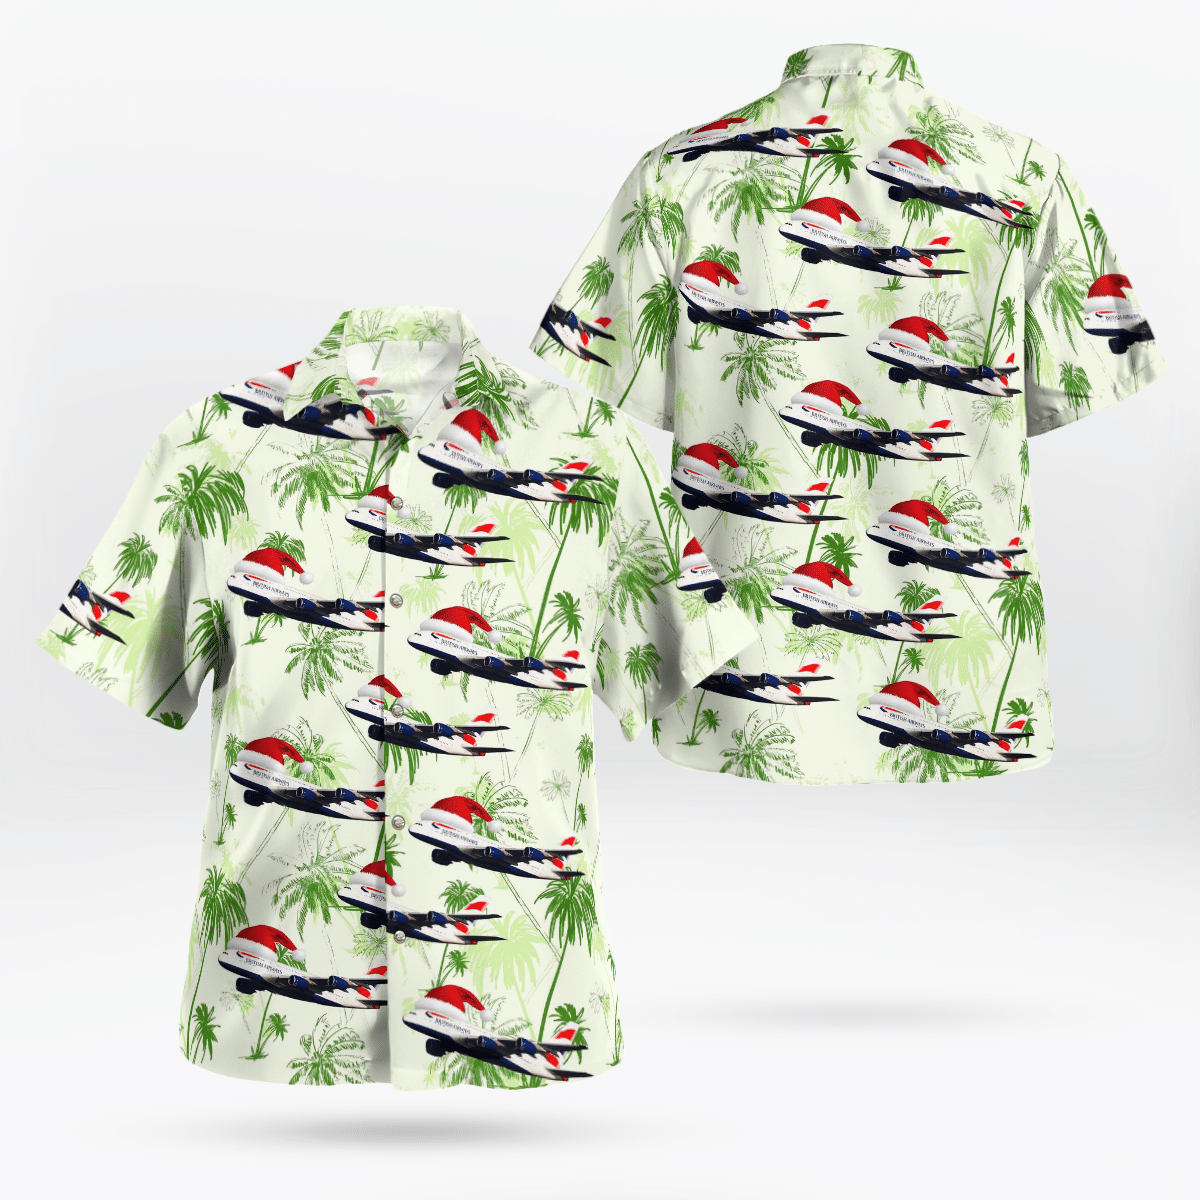 Why don't you order Hot Hawaiian Shirt today? 159